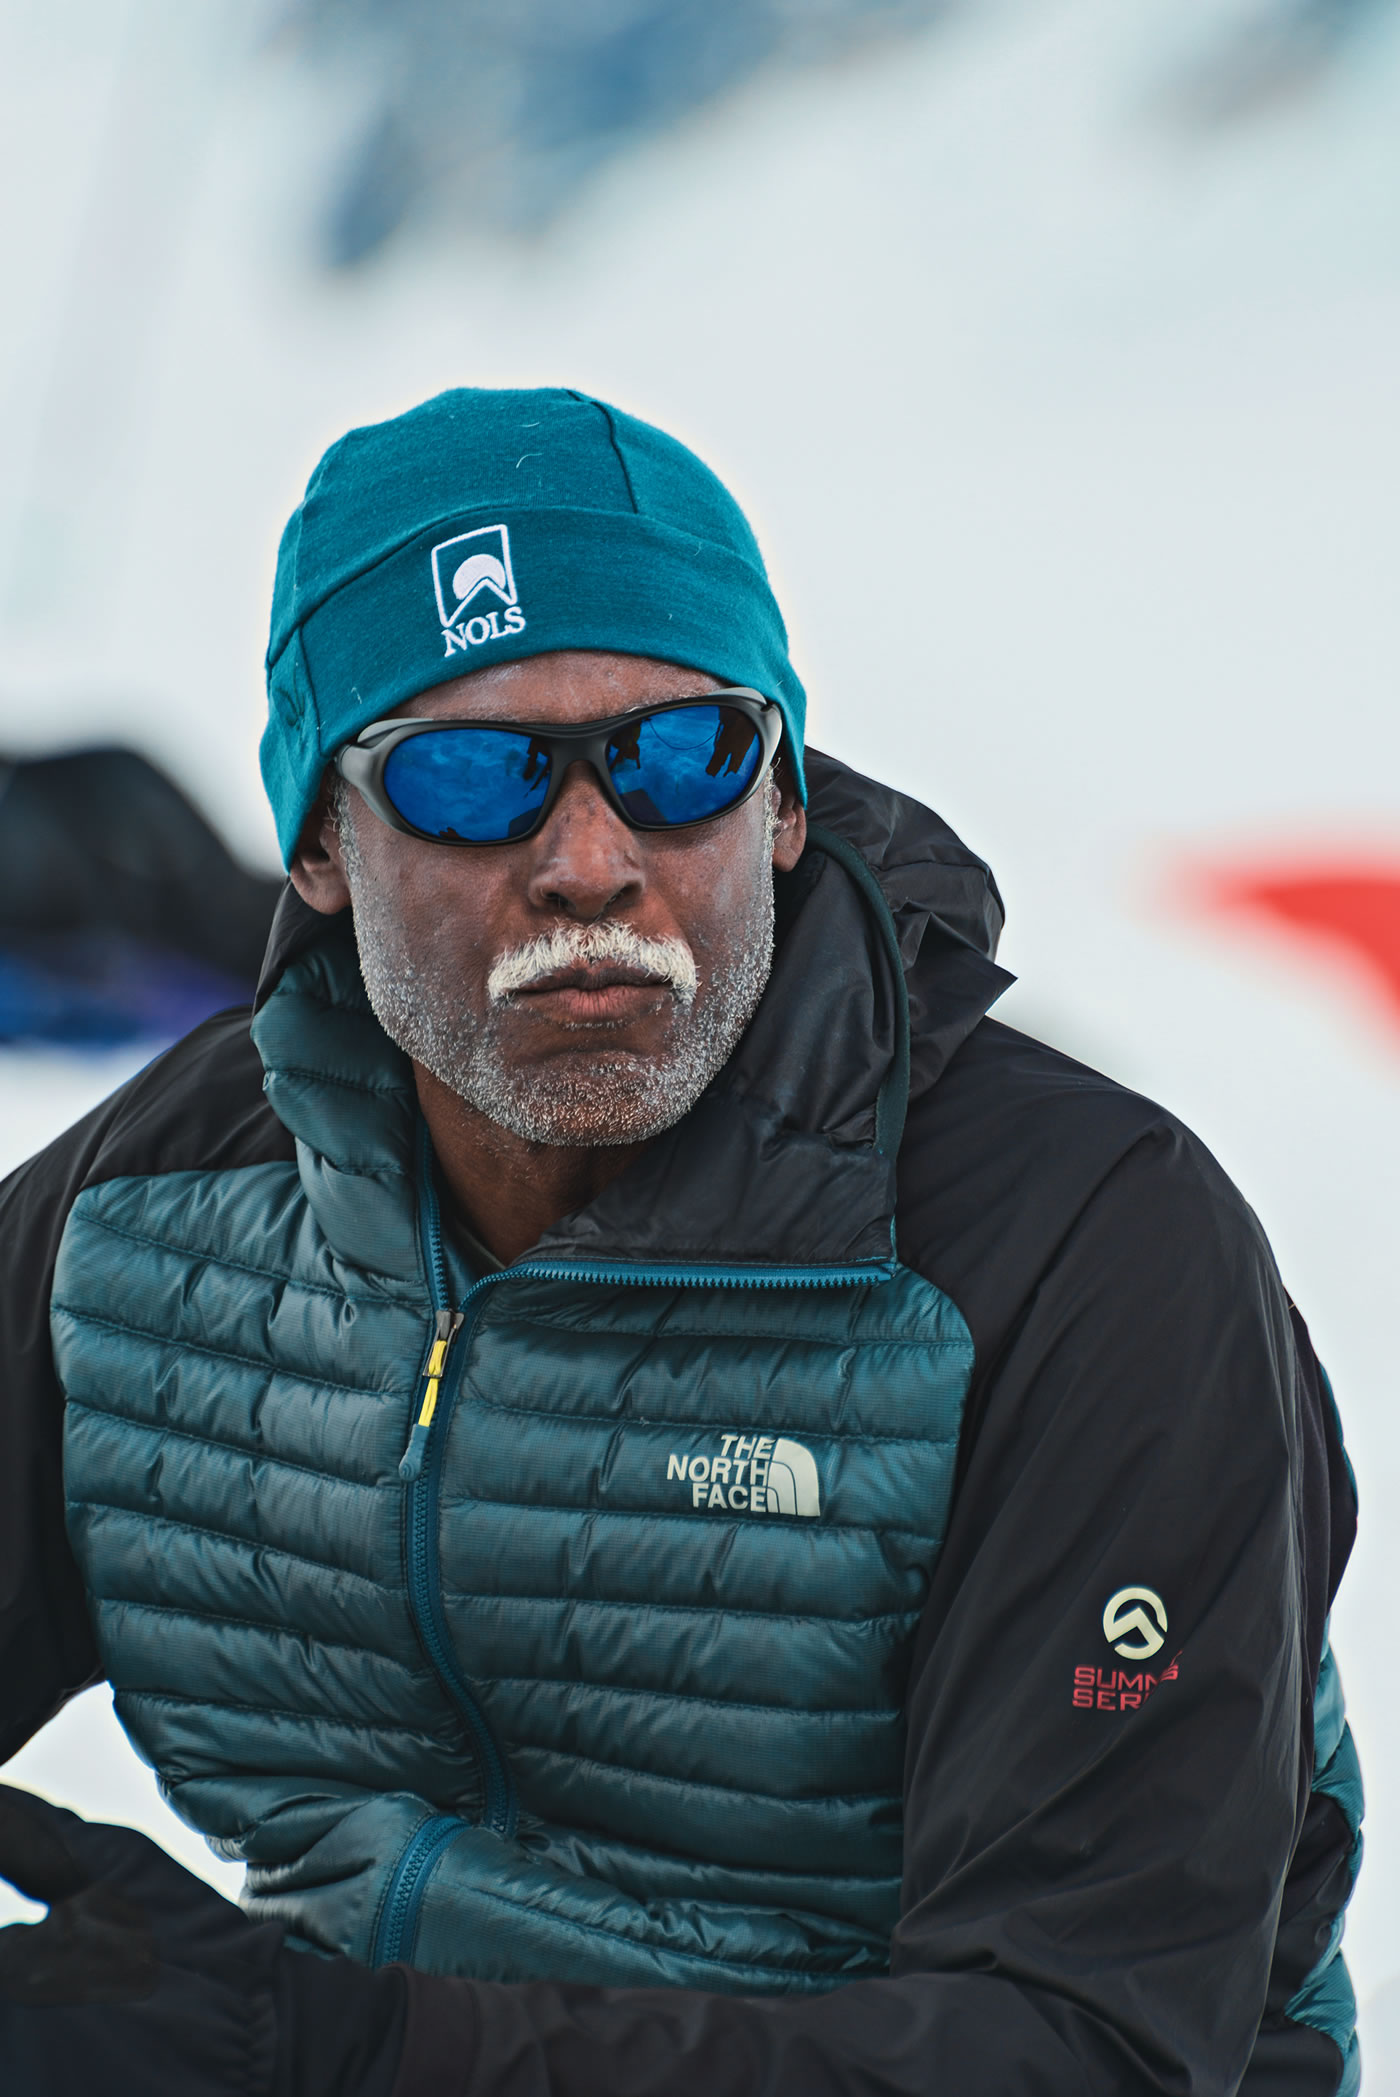 Stephen Shobe, during Expedition Denali in 2013. [Photo] Hudson Henry